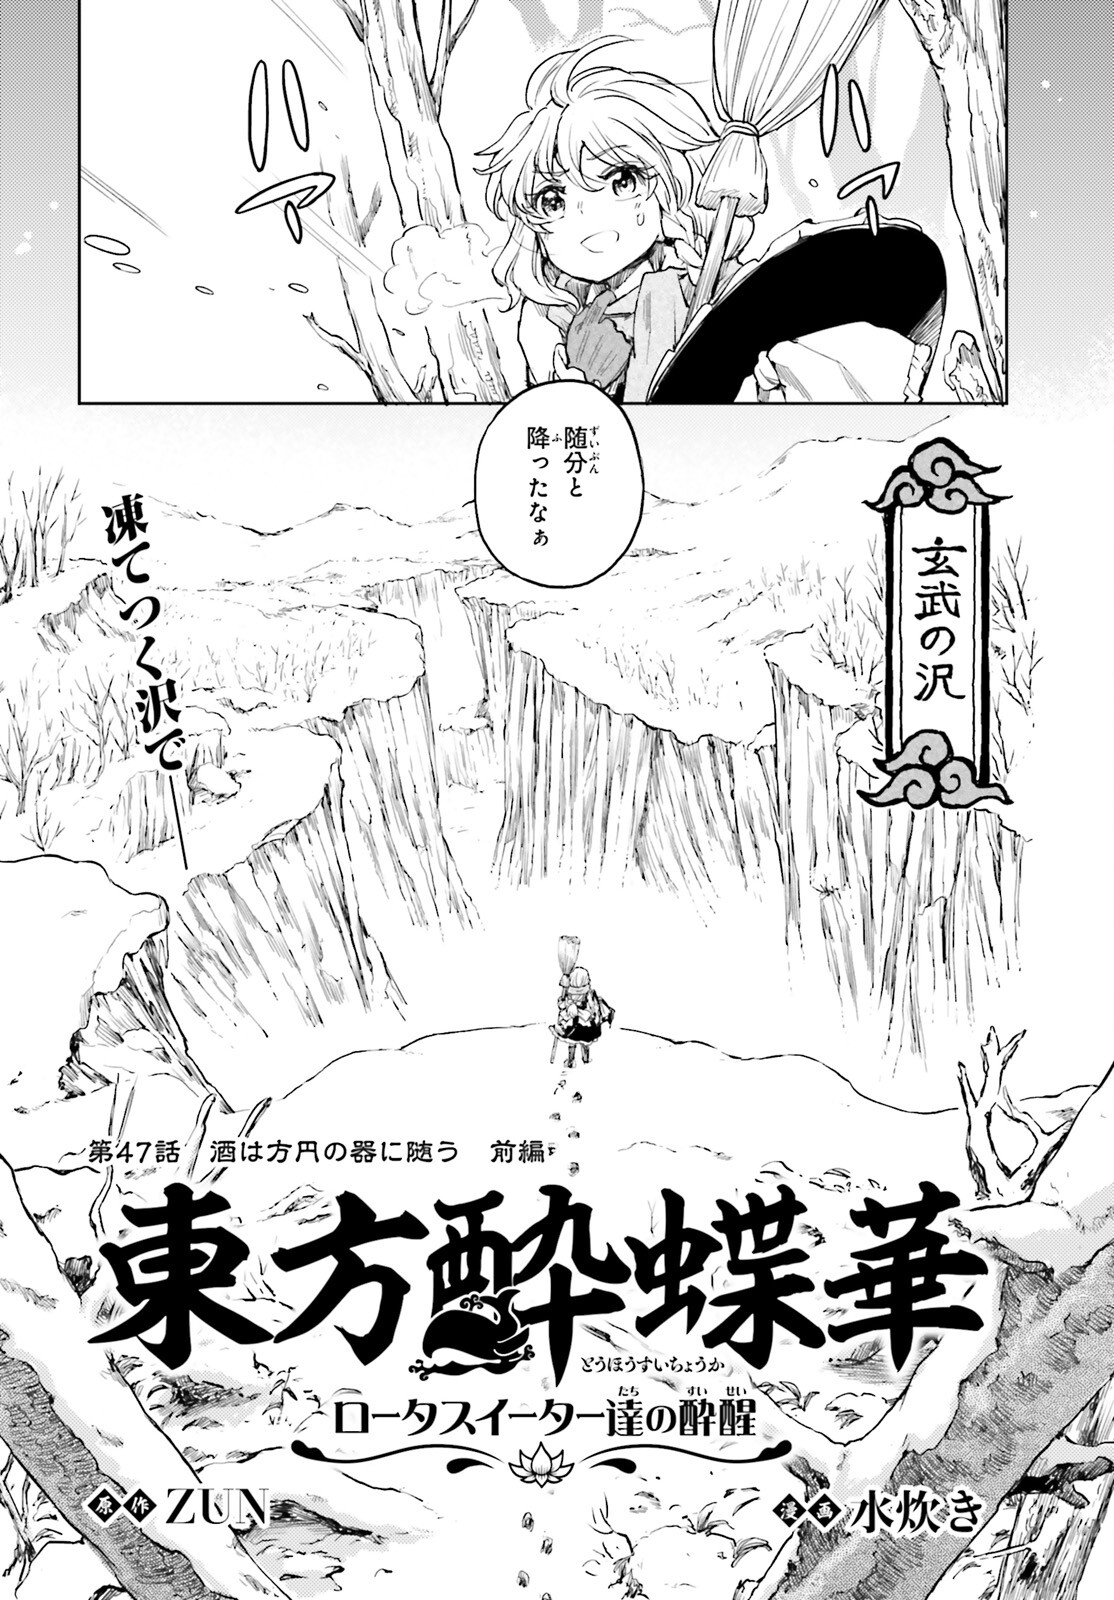 Touhouyoi Chouka Routasuiitaa-tachi no Yoiza - Chapter 47 - Page 2